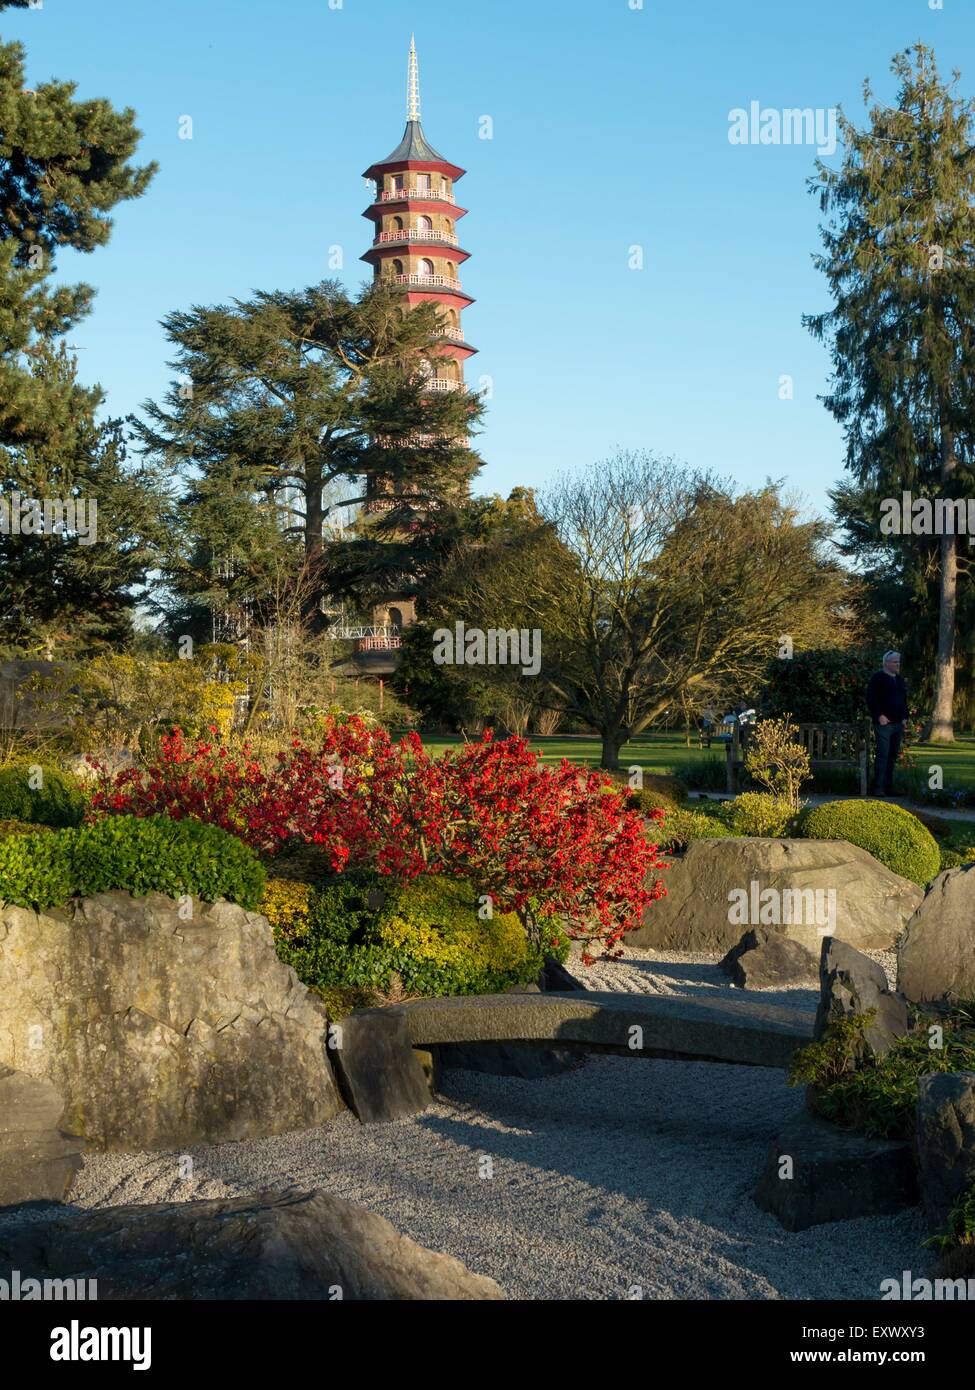 Die chinesische Pagode, Royal Botanic Gardens, London Borough of Richmond upon Thames, London, England, Großbritannien, Europa Stockfoto